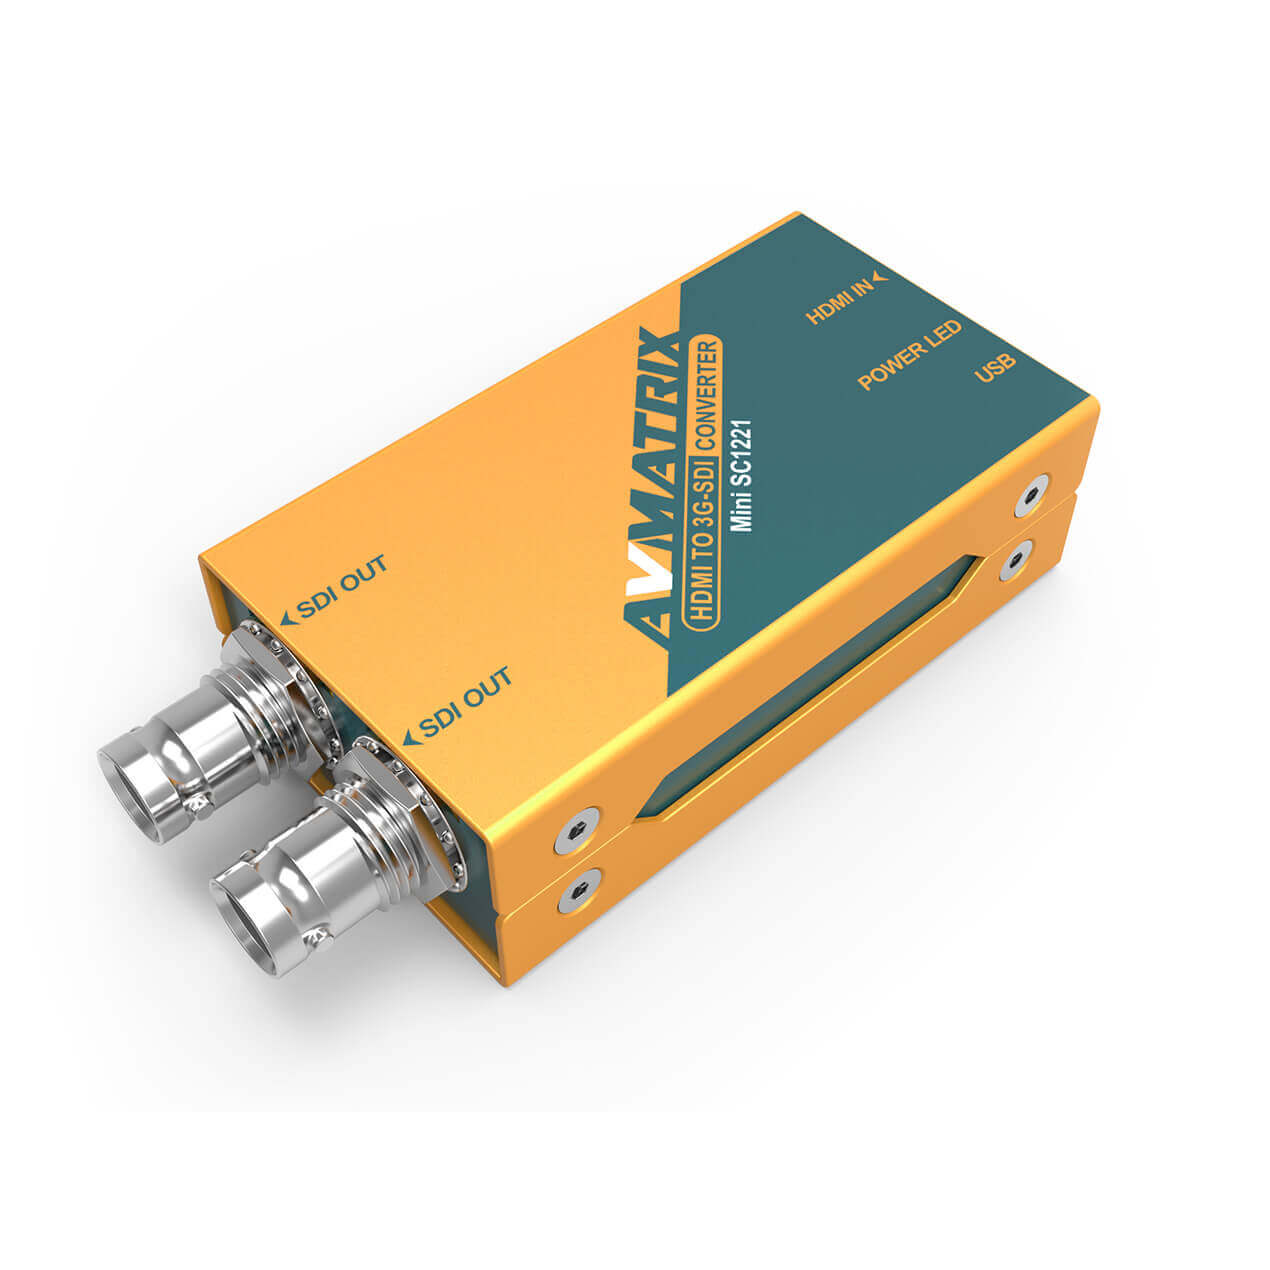 Mini SC1221 – HDMI to SDI Mini Converter